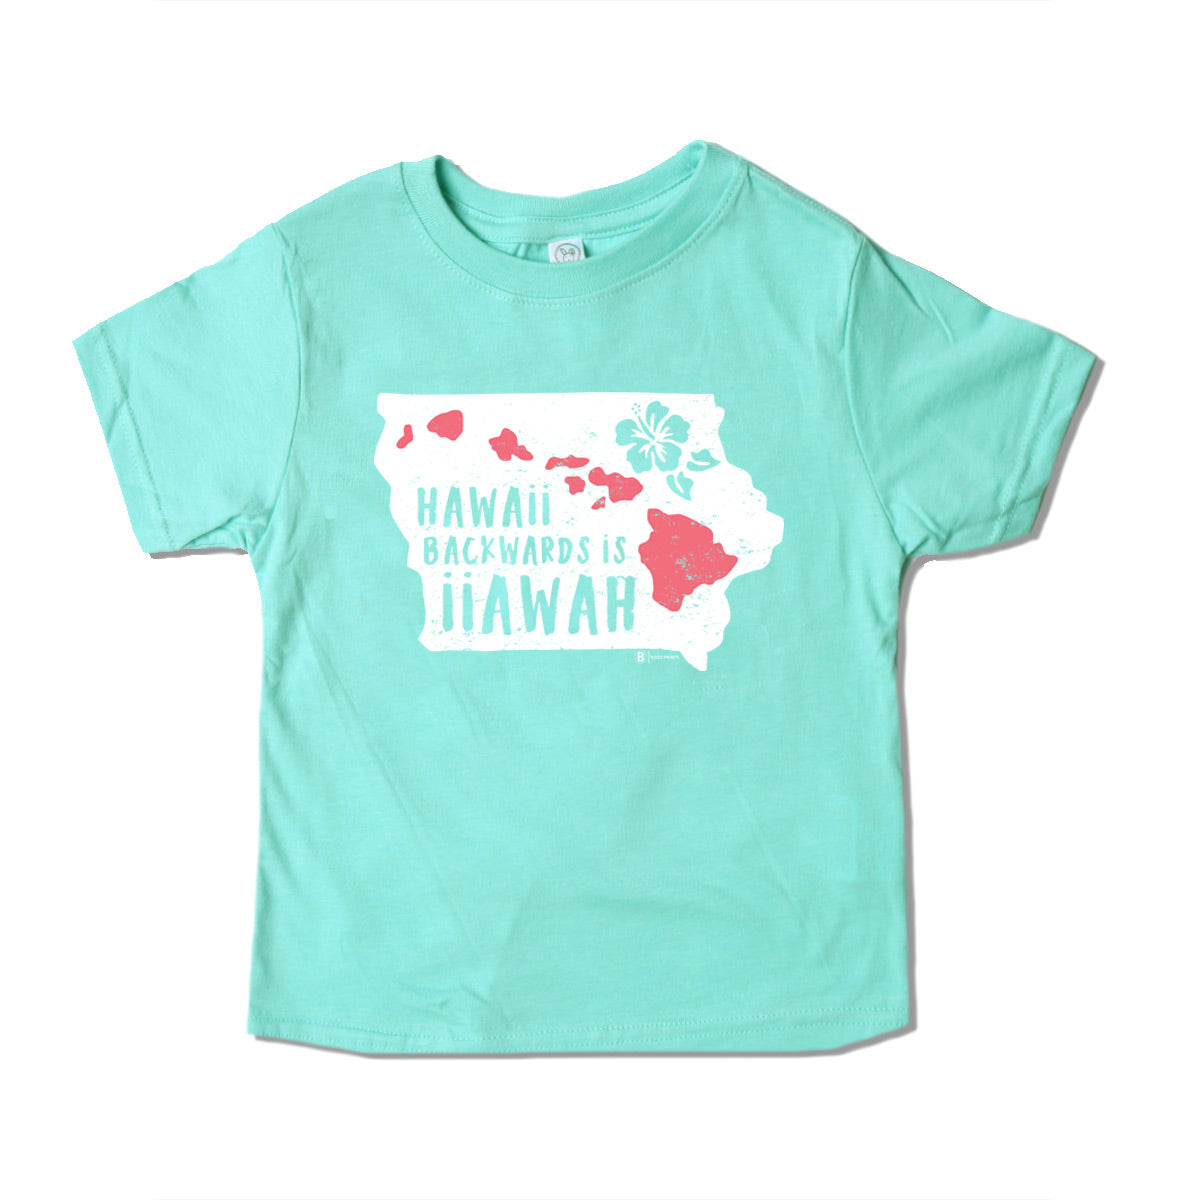 Hawaii Backwards is Iiawah Kids Seafoam T-Shirt - Bozz Prints